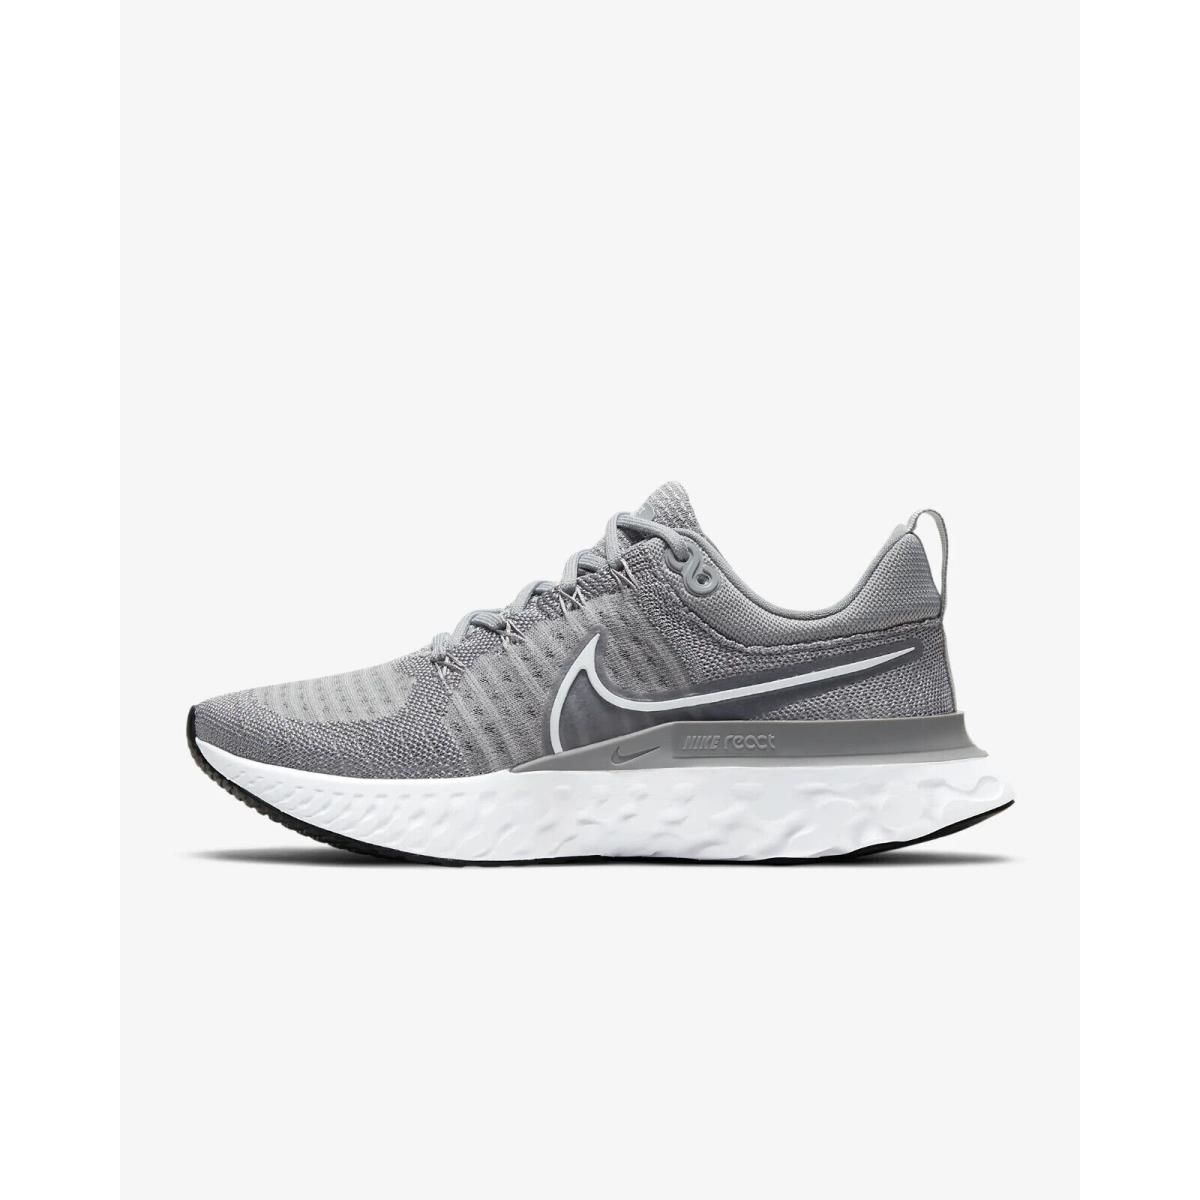 Nike React Infinity Run Flyknit 2 Shoes Gray White CT2423 001 - Size 6.5 Womens